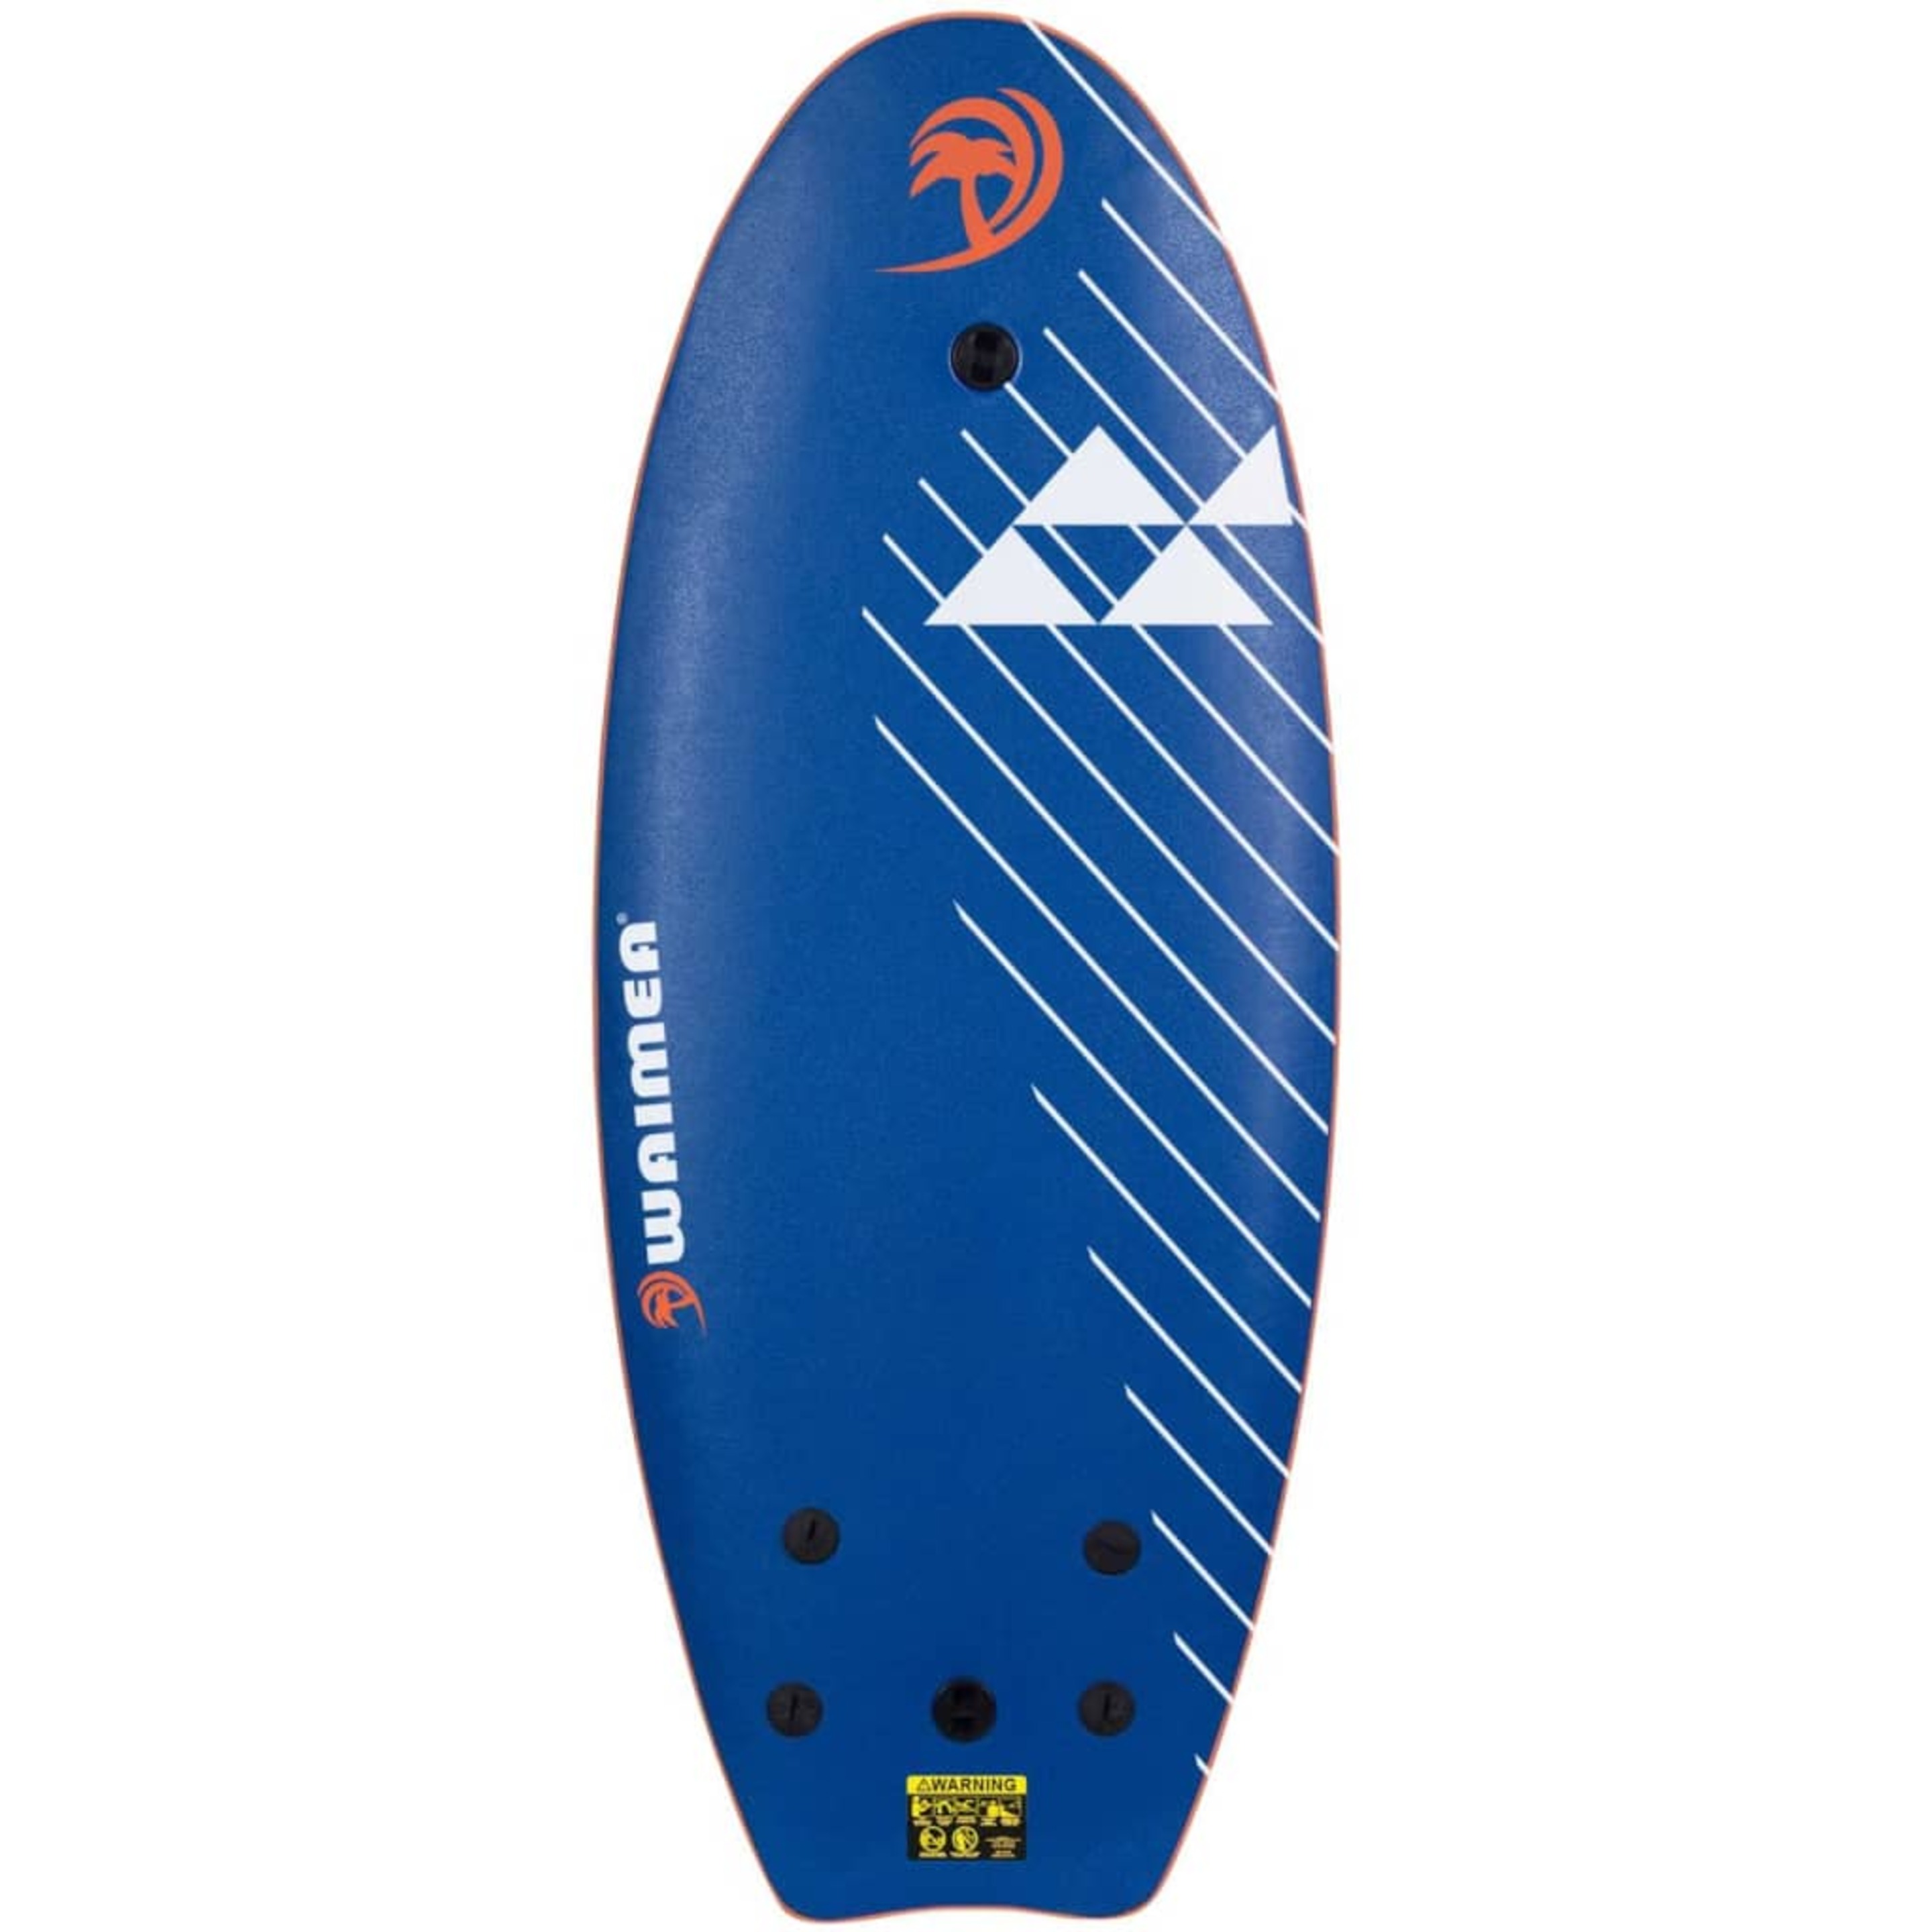 Waimea Prancha De Surf Eps 114 Cm Azul Liso 52wz-blo-unol